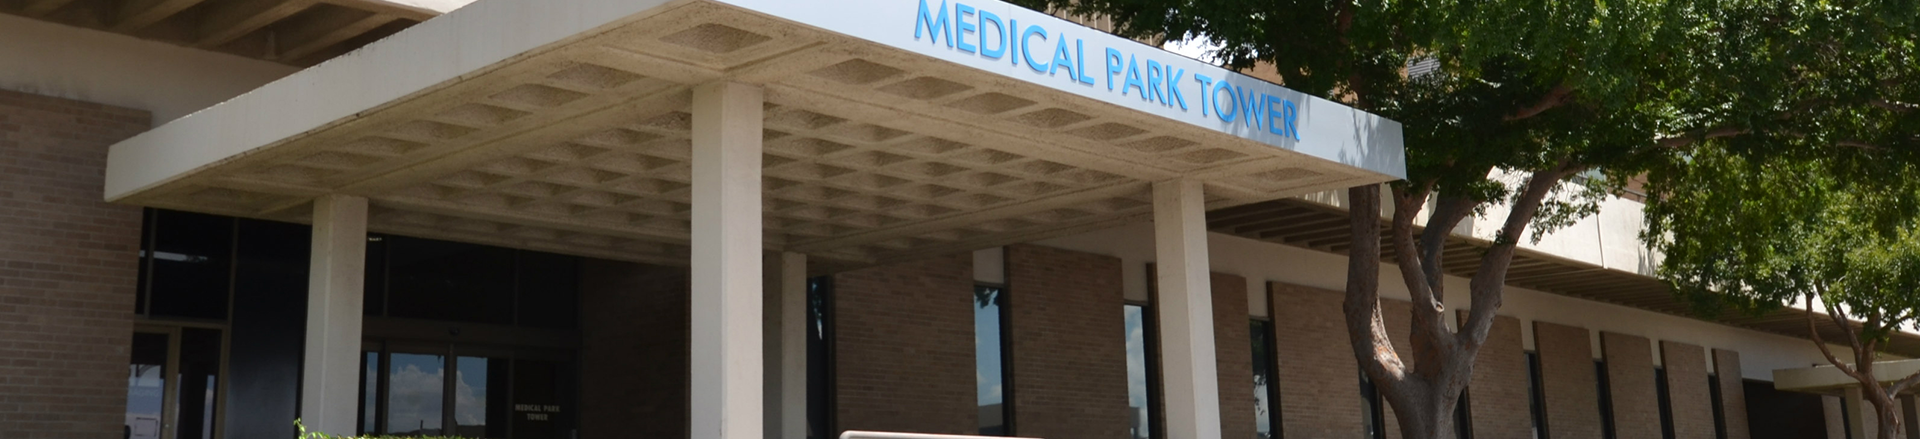 Medical Park Tower Surgery Center